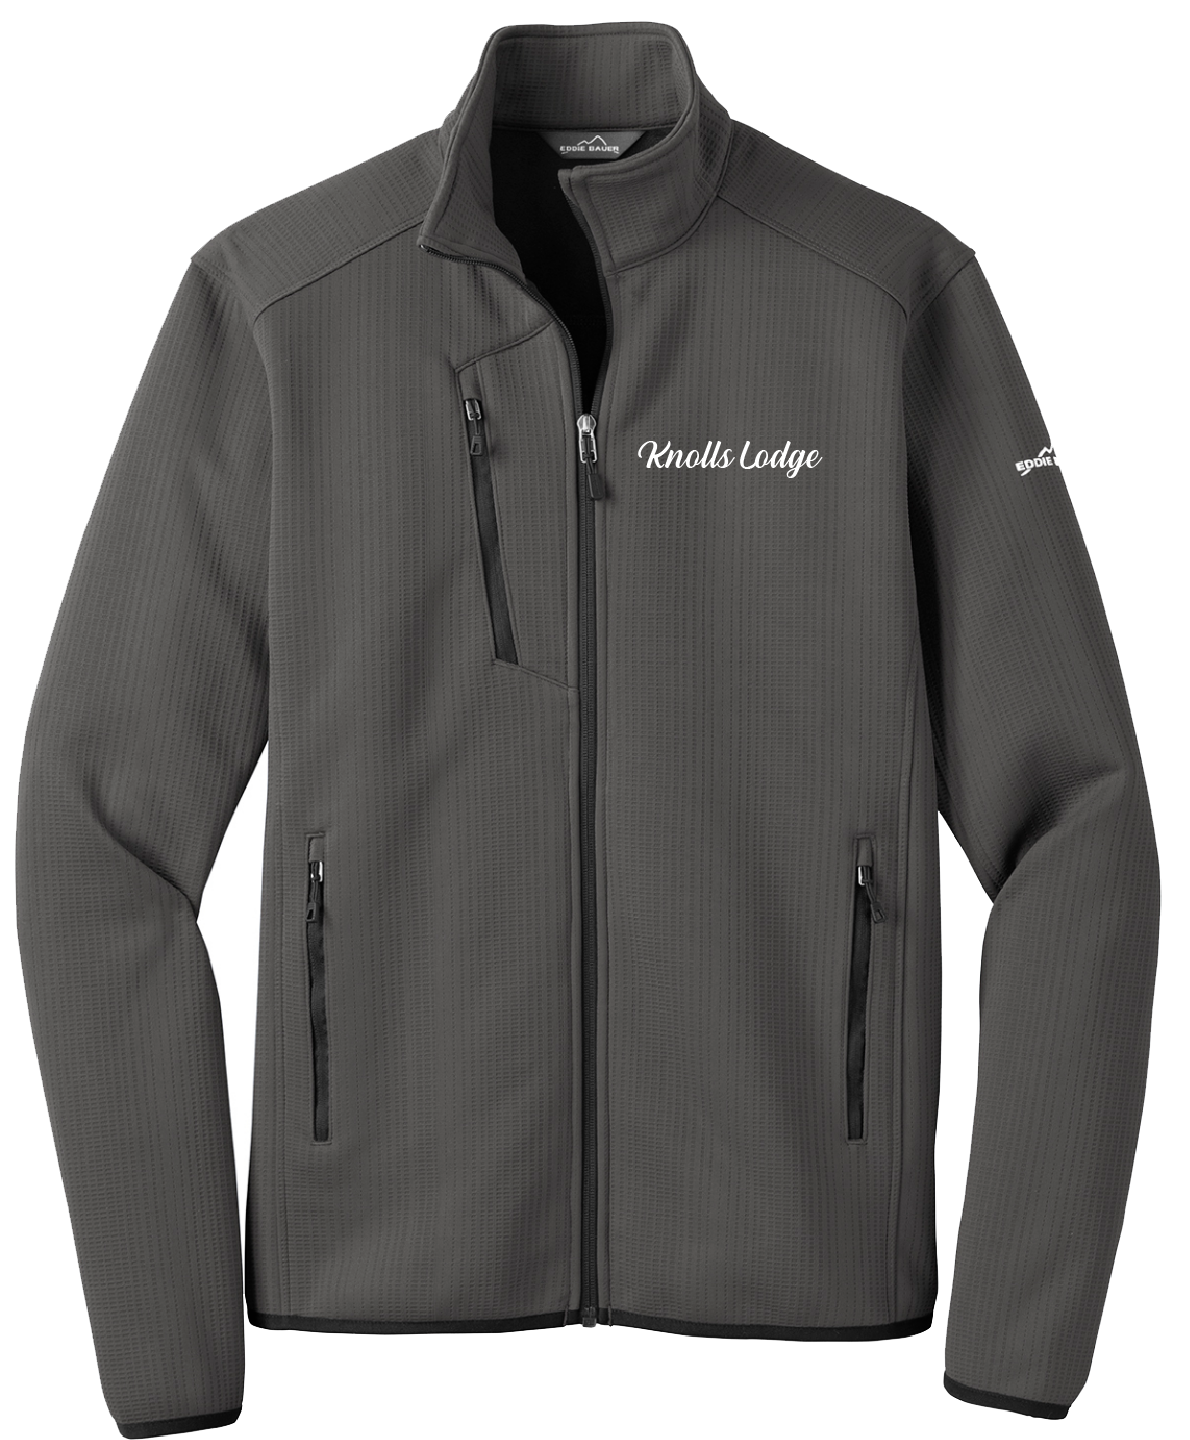 Knolls Lodge  - Mens - Eddie Bauer ® Dash Full-Zip Fleece Jacket